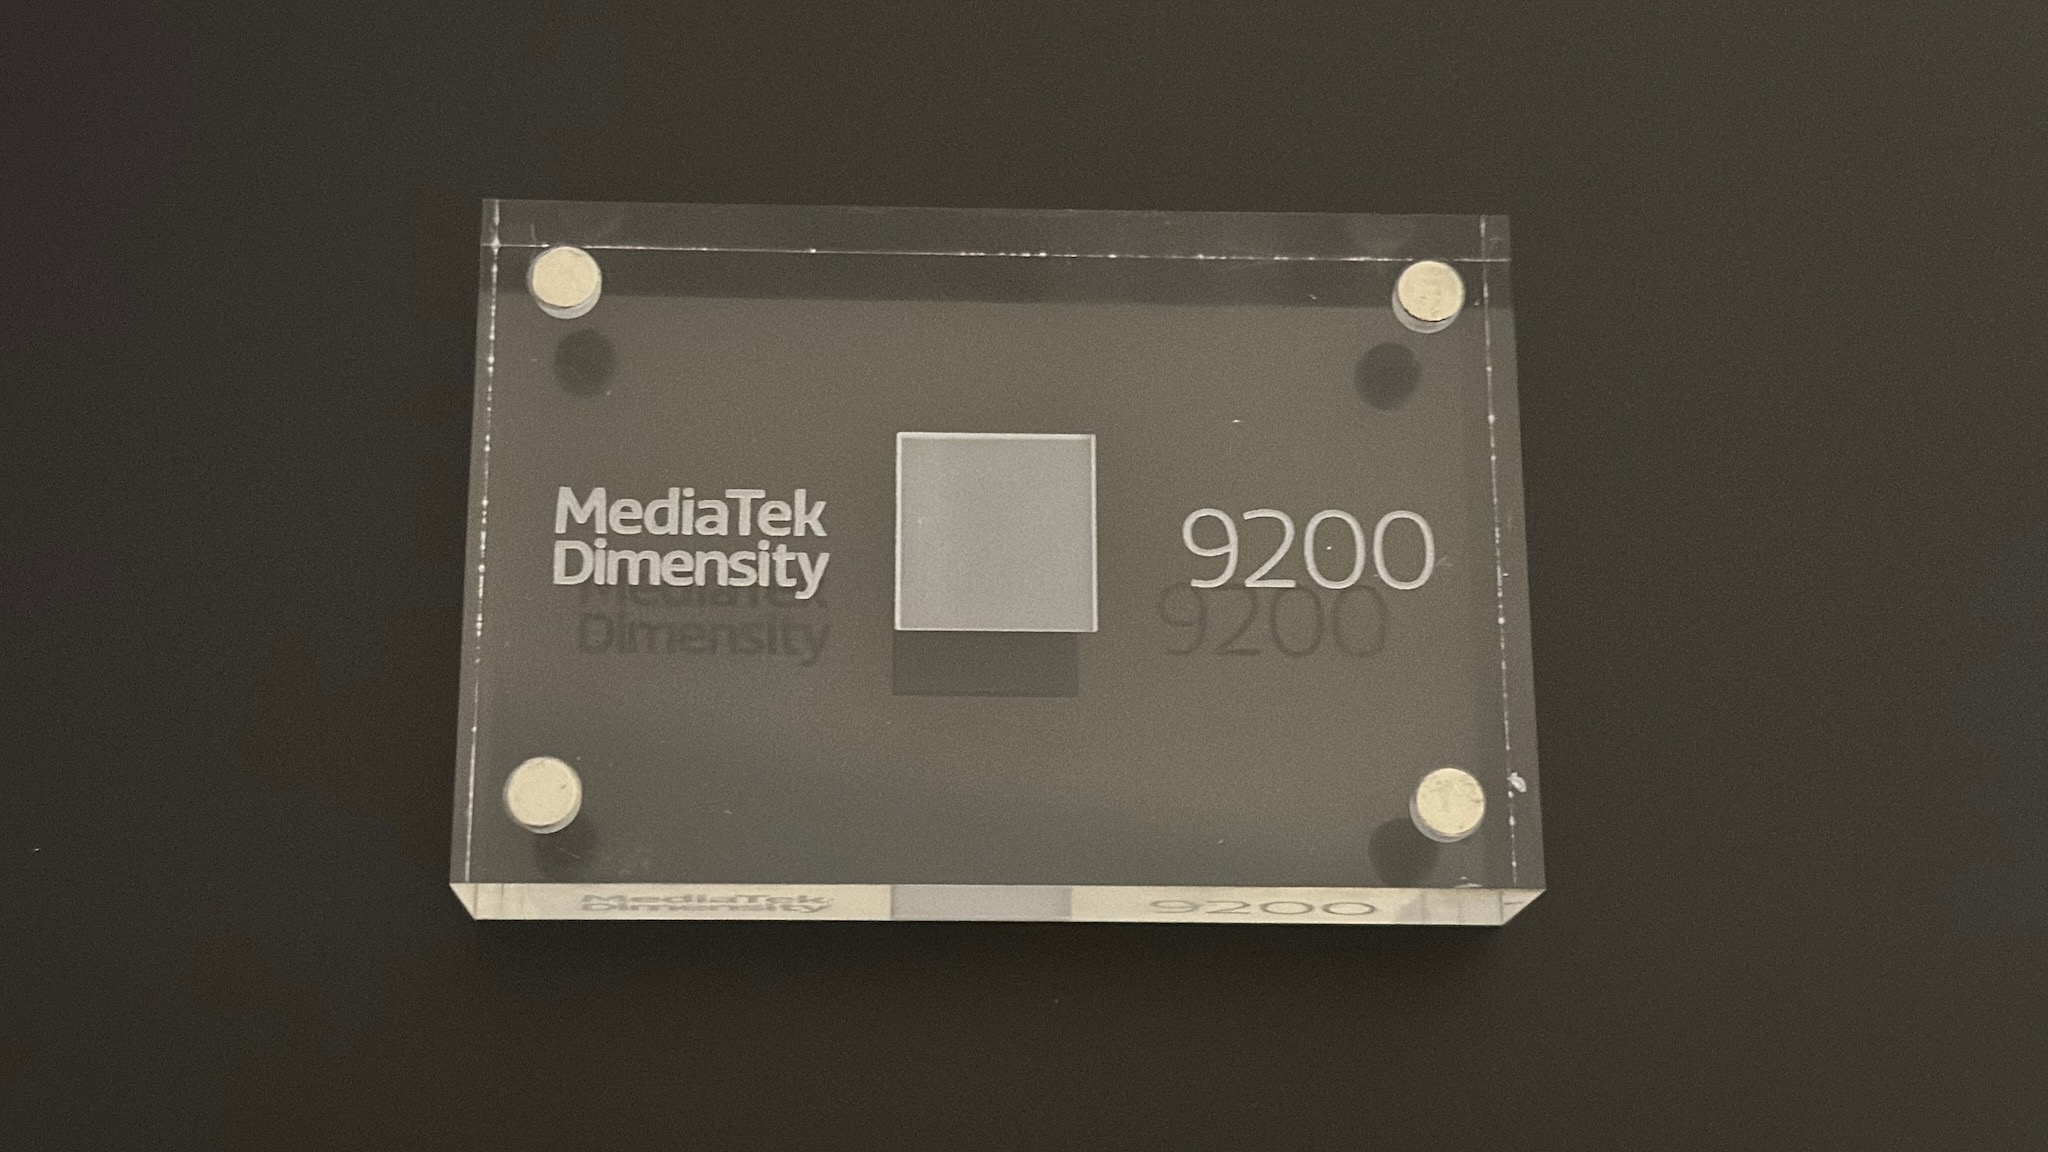 A close-up of the MediaTek Dimensity 9200